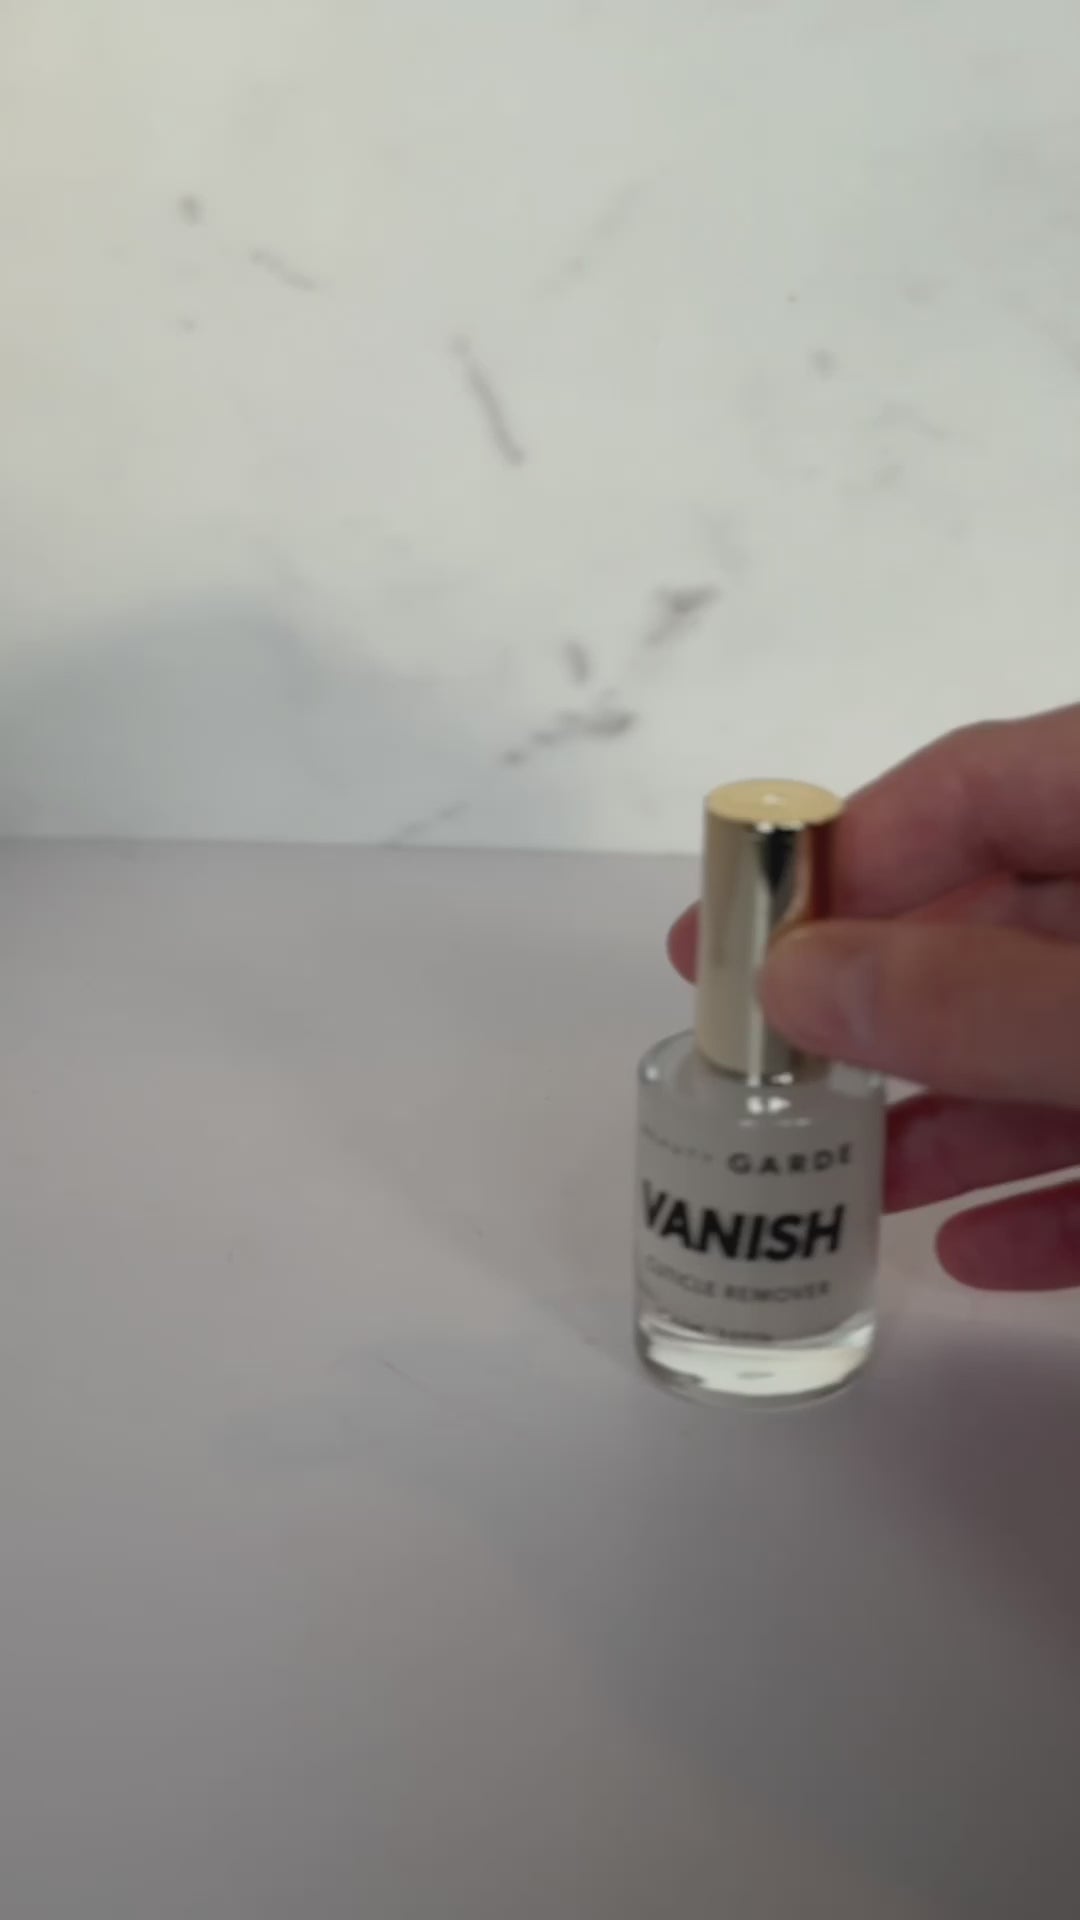 Vanish Cuticle Remover